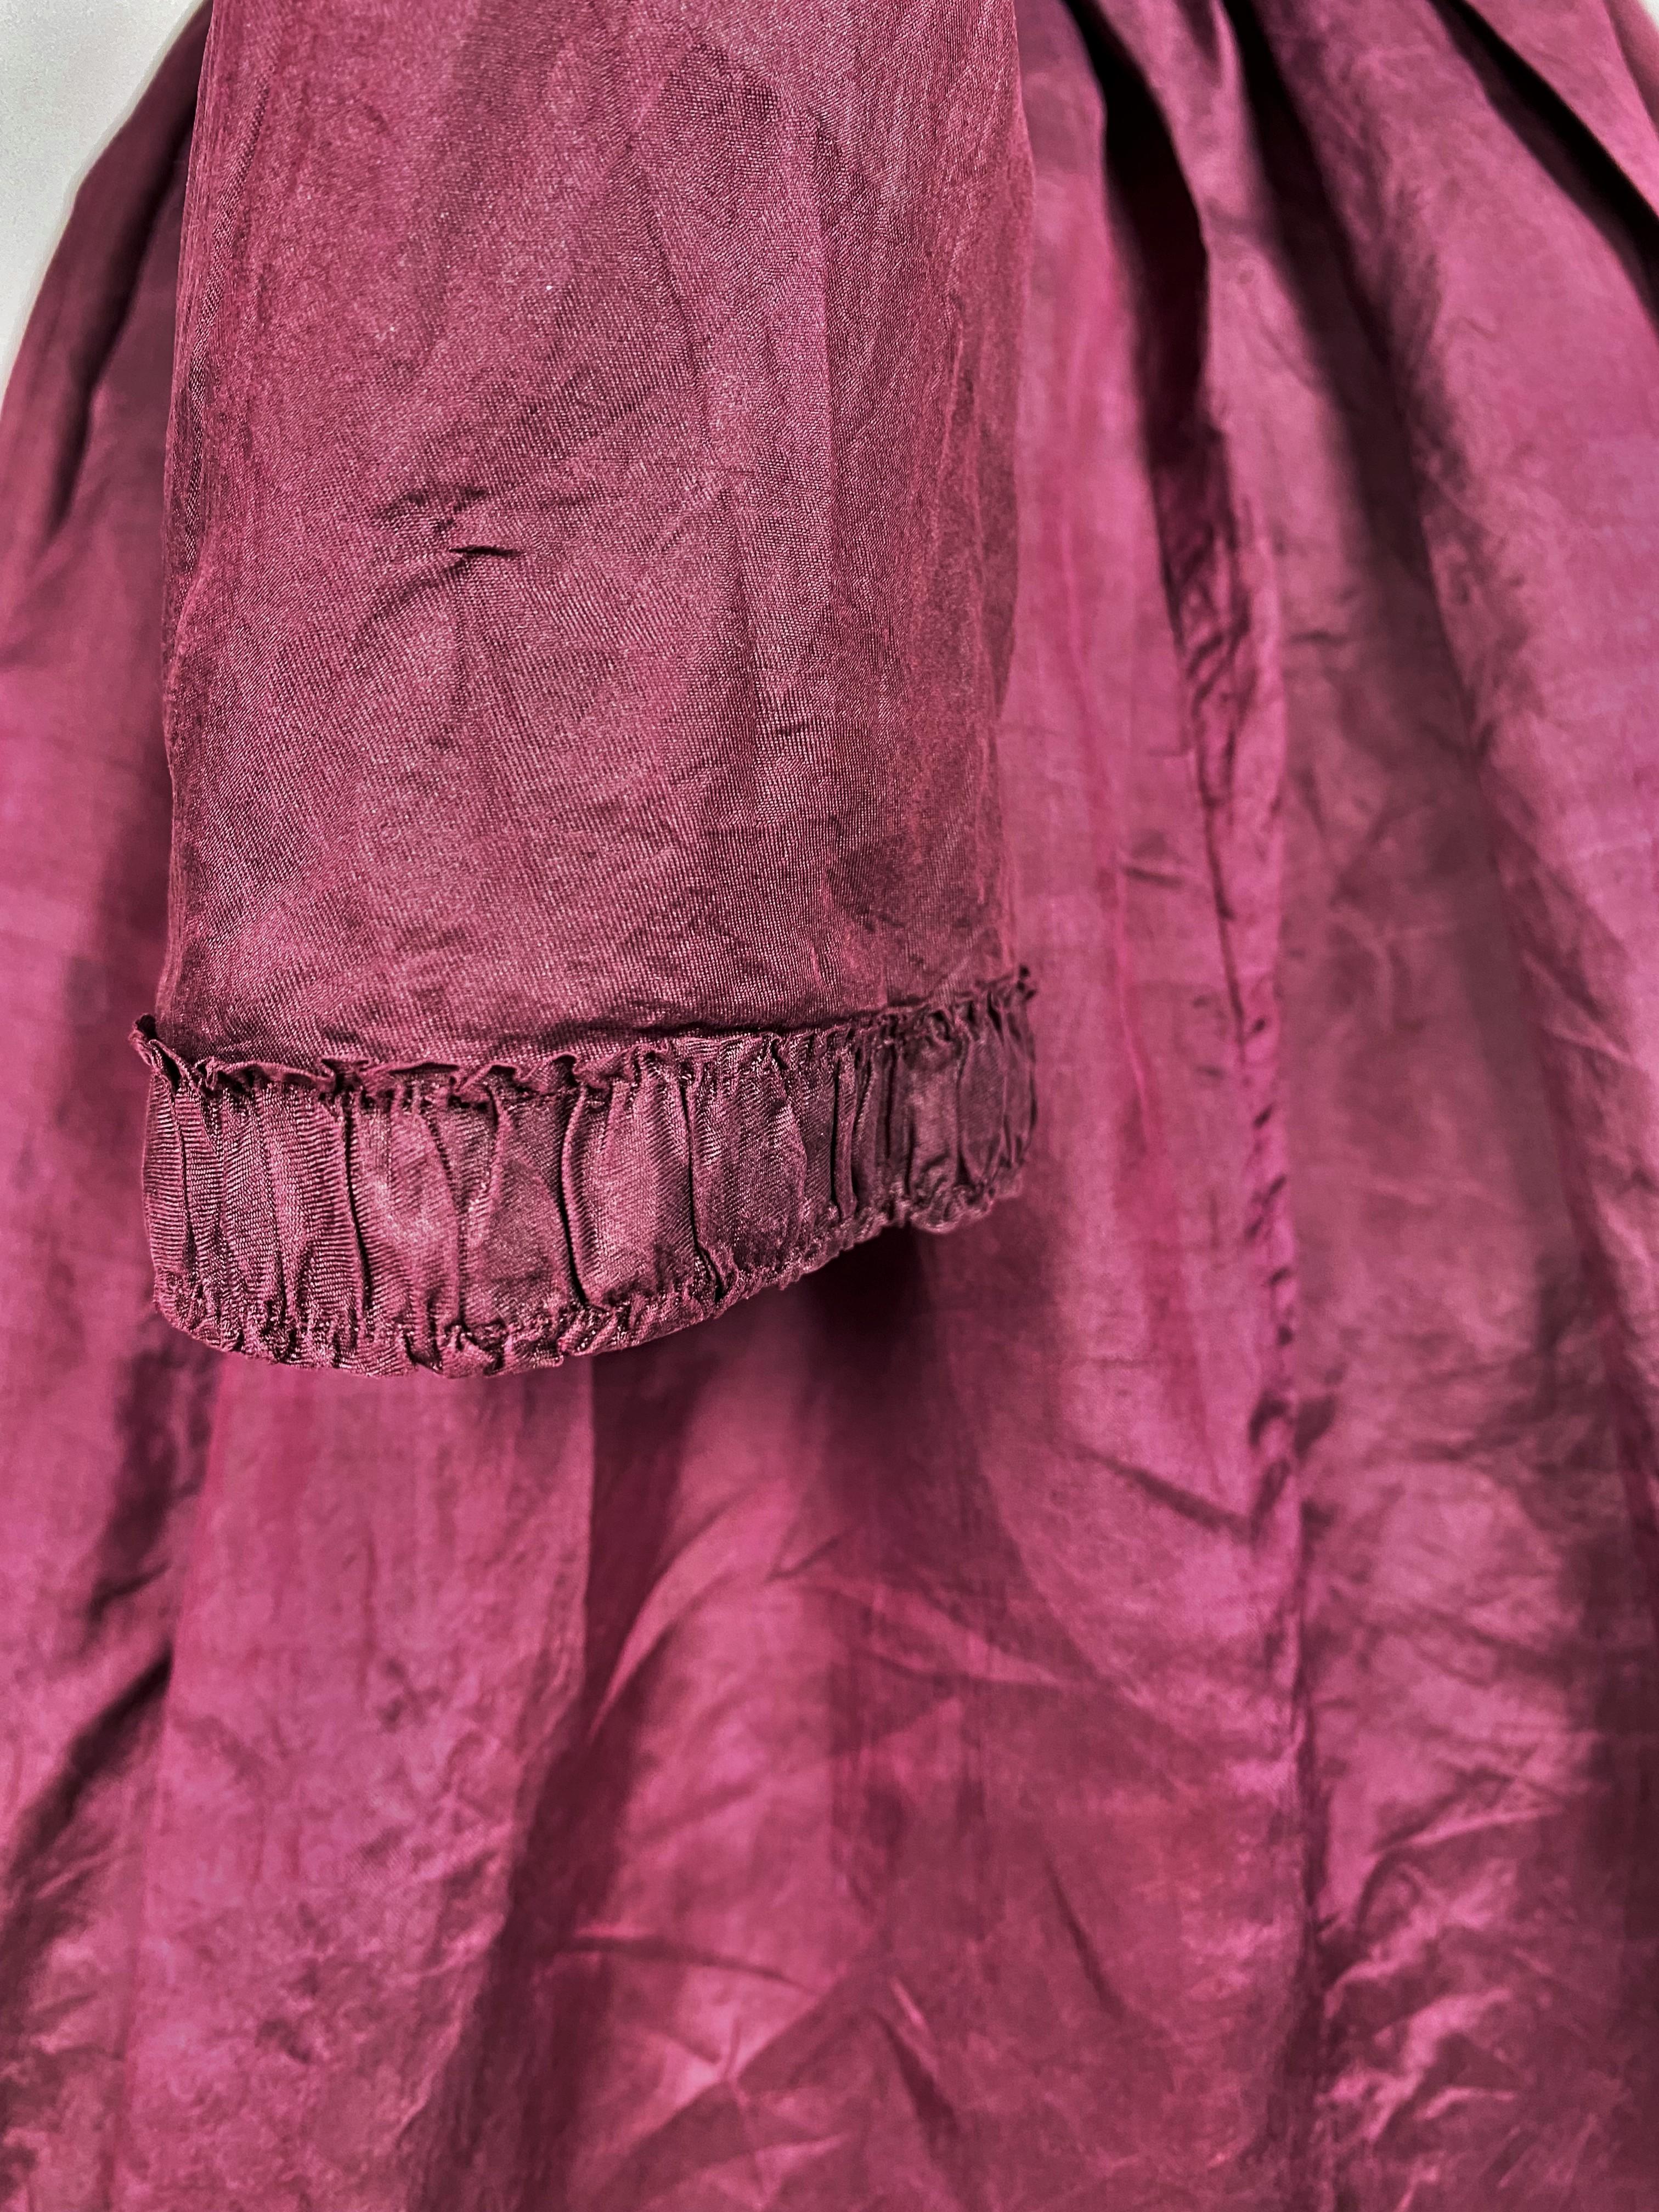 A Dyed Taffeta-Aubergine French Day Dress Circa 1845 2